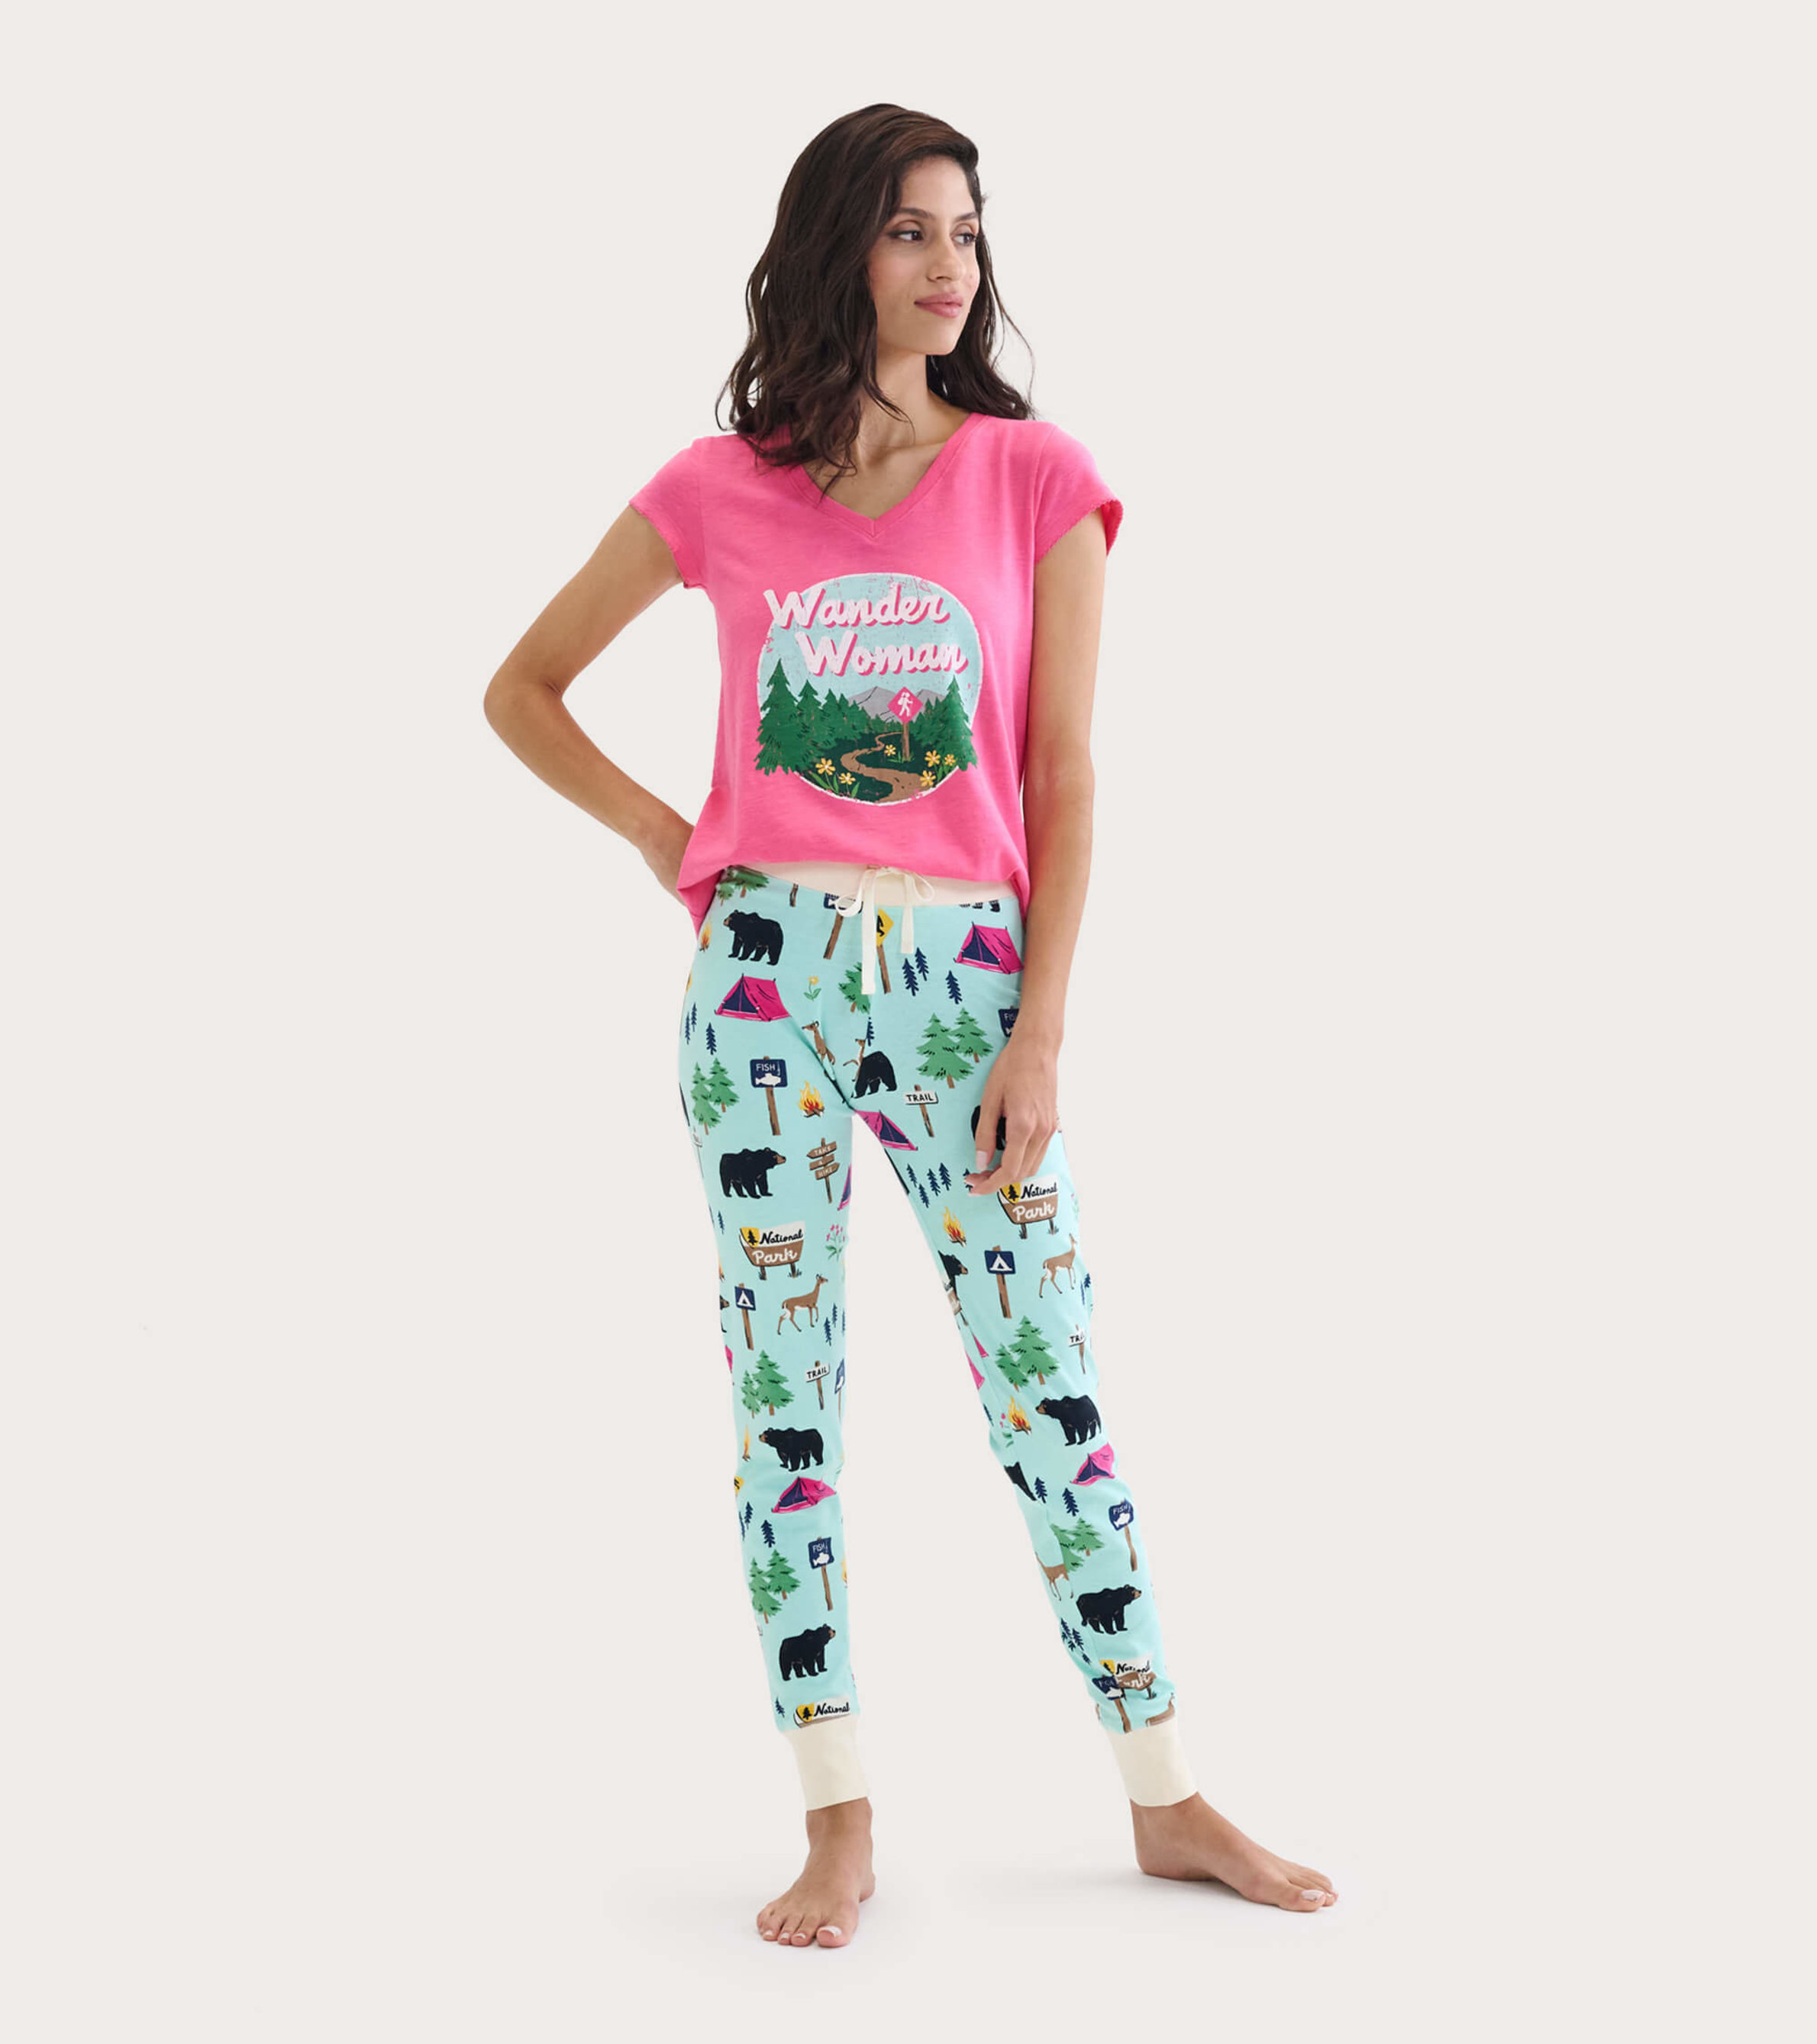 Star Wars Pyjamas Women's Princess Leia Leggings Loungepants & T-Shirt PJ  Set | eBay